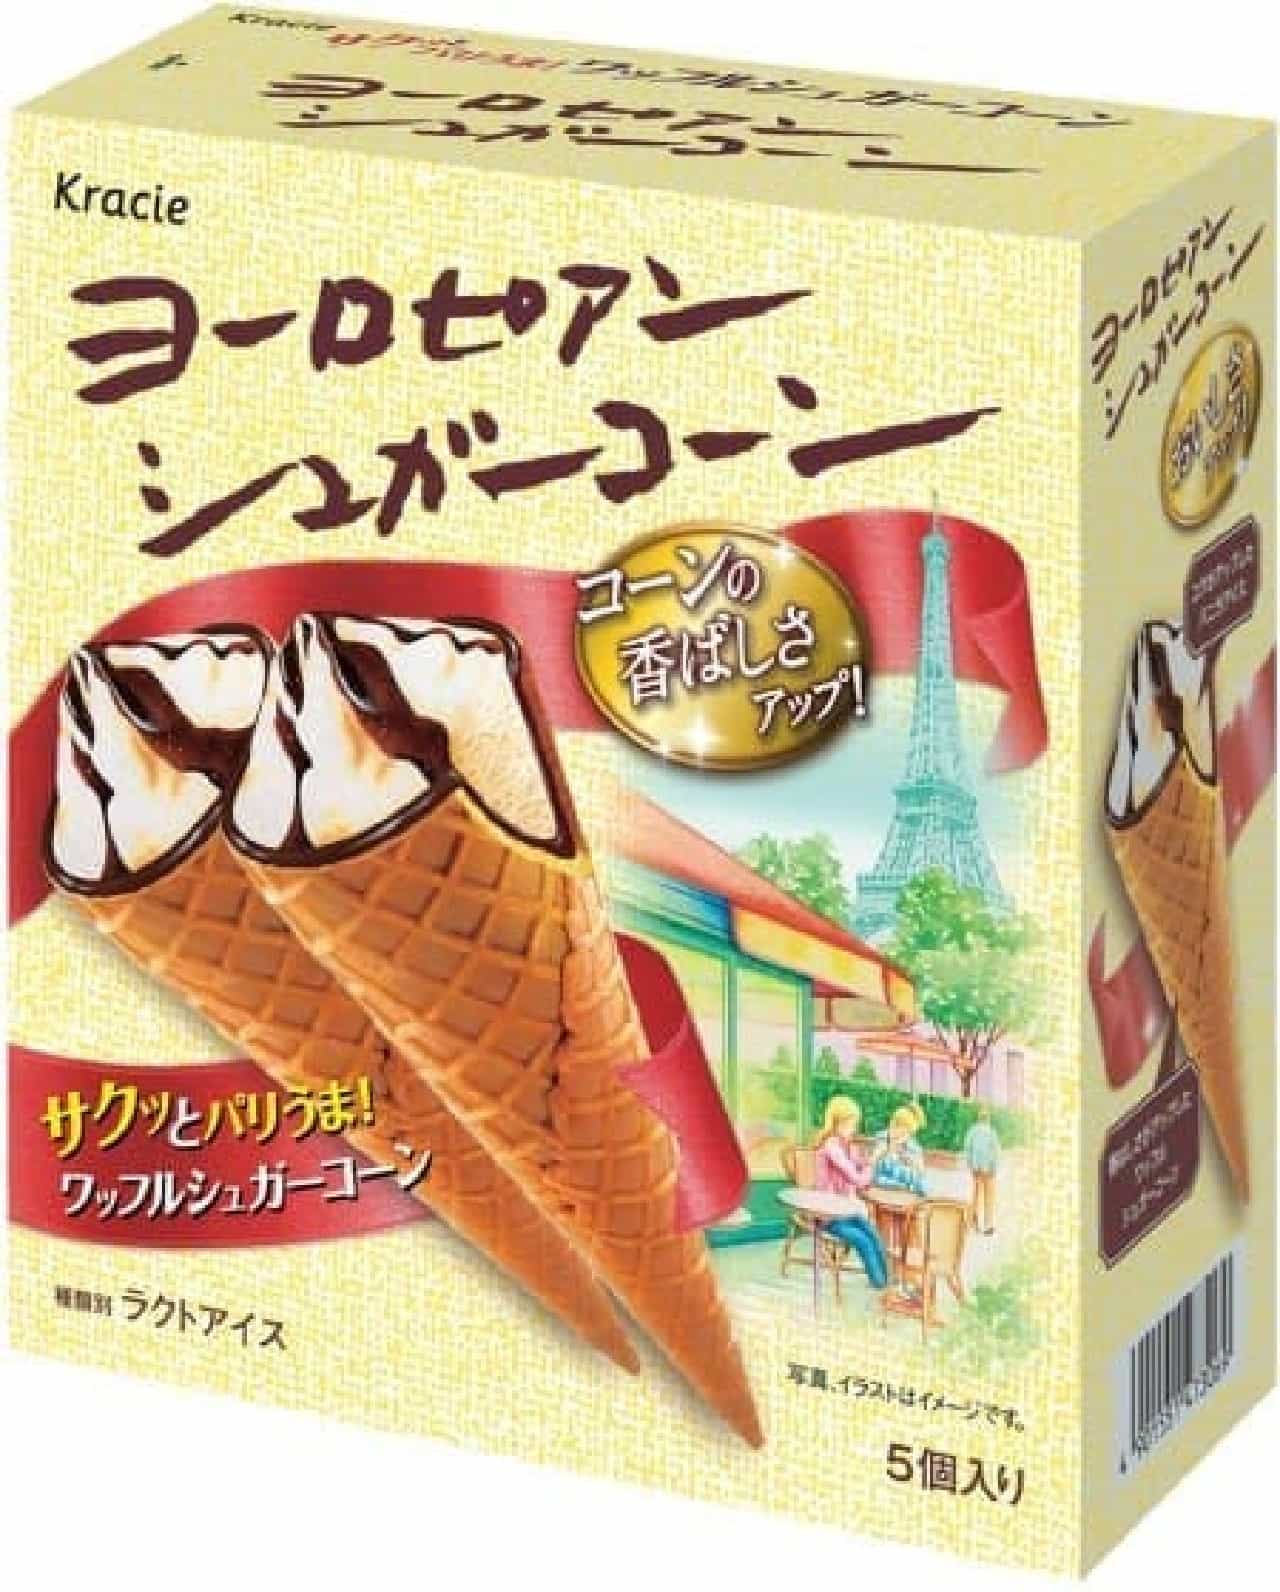 Kracie Foods "European Sugar Corn Vanilla"